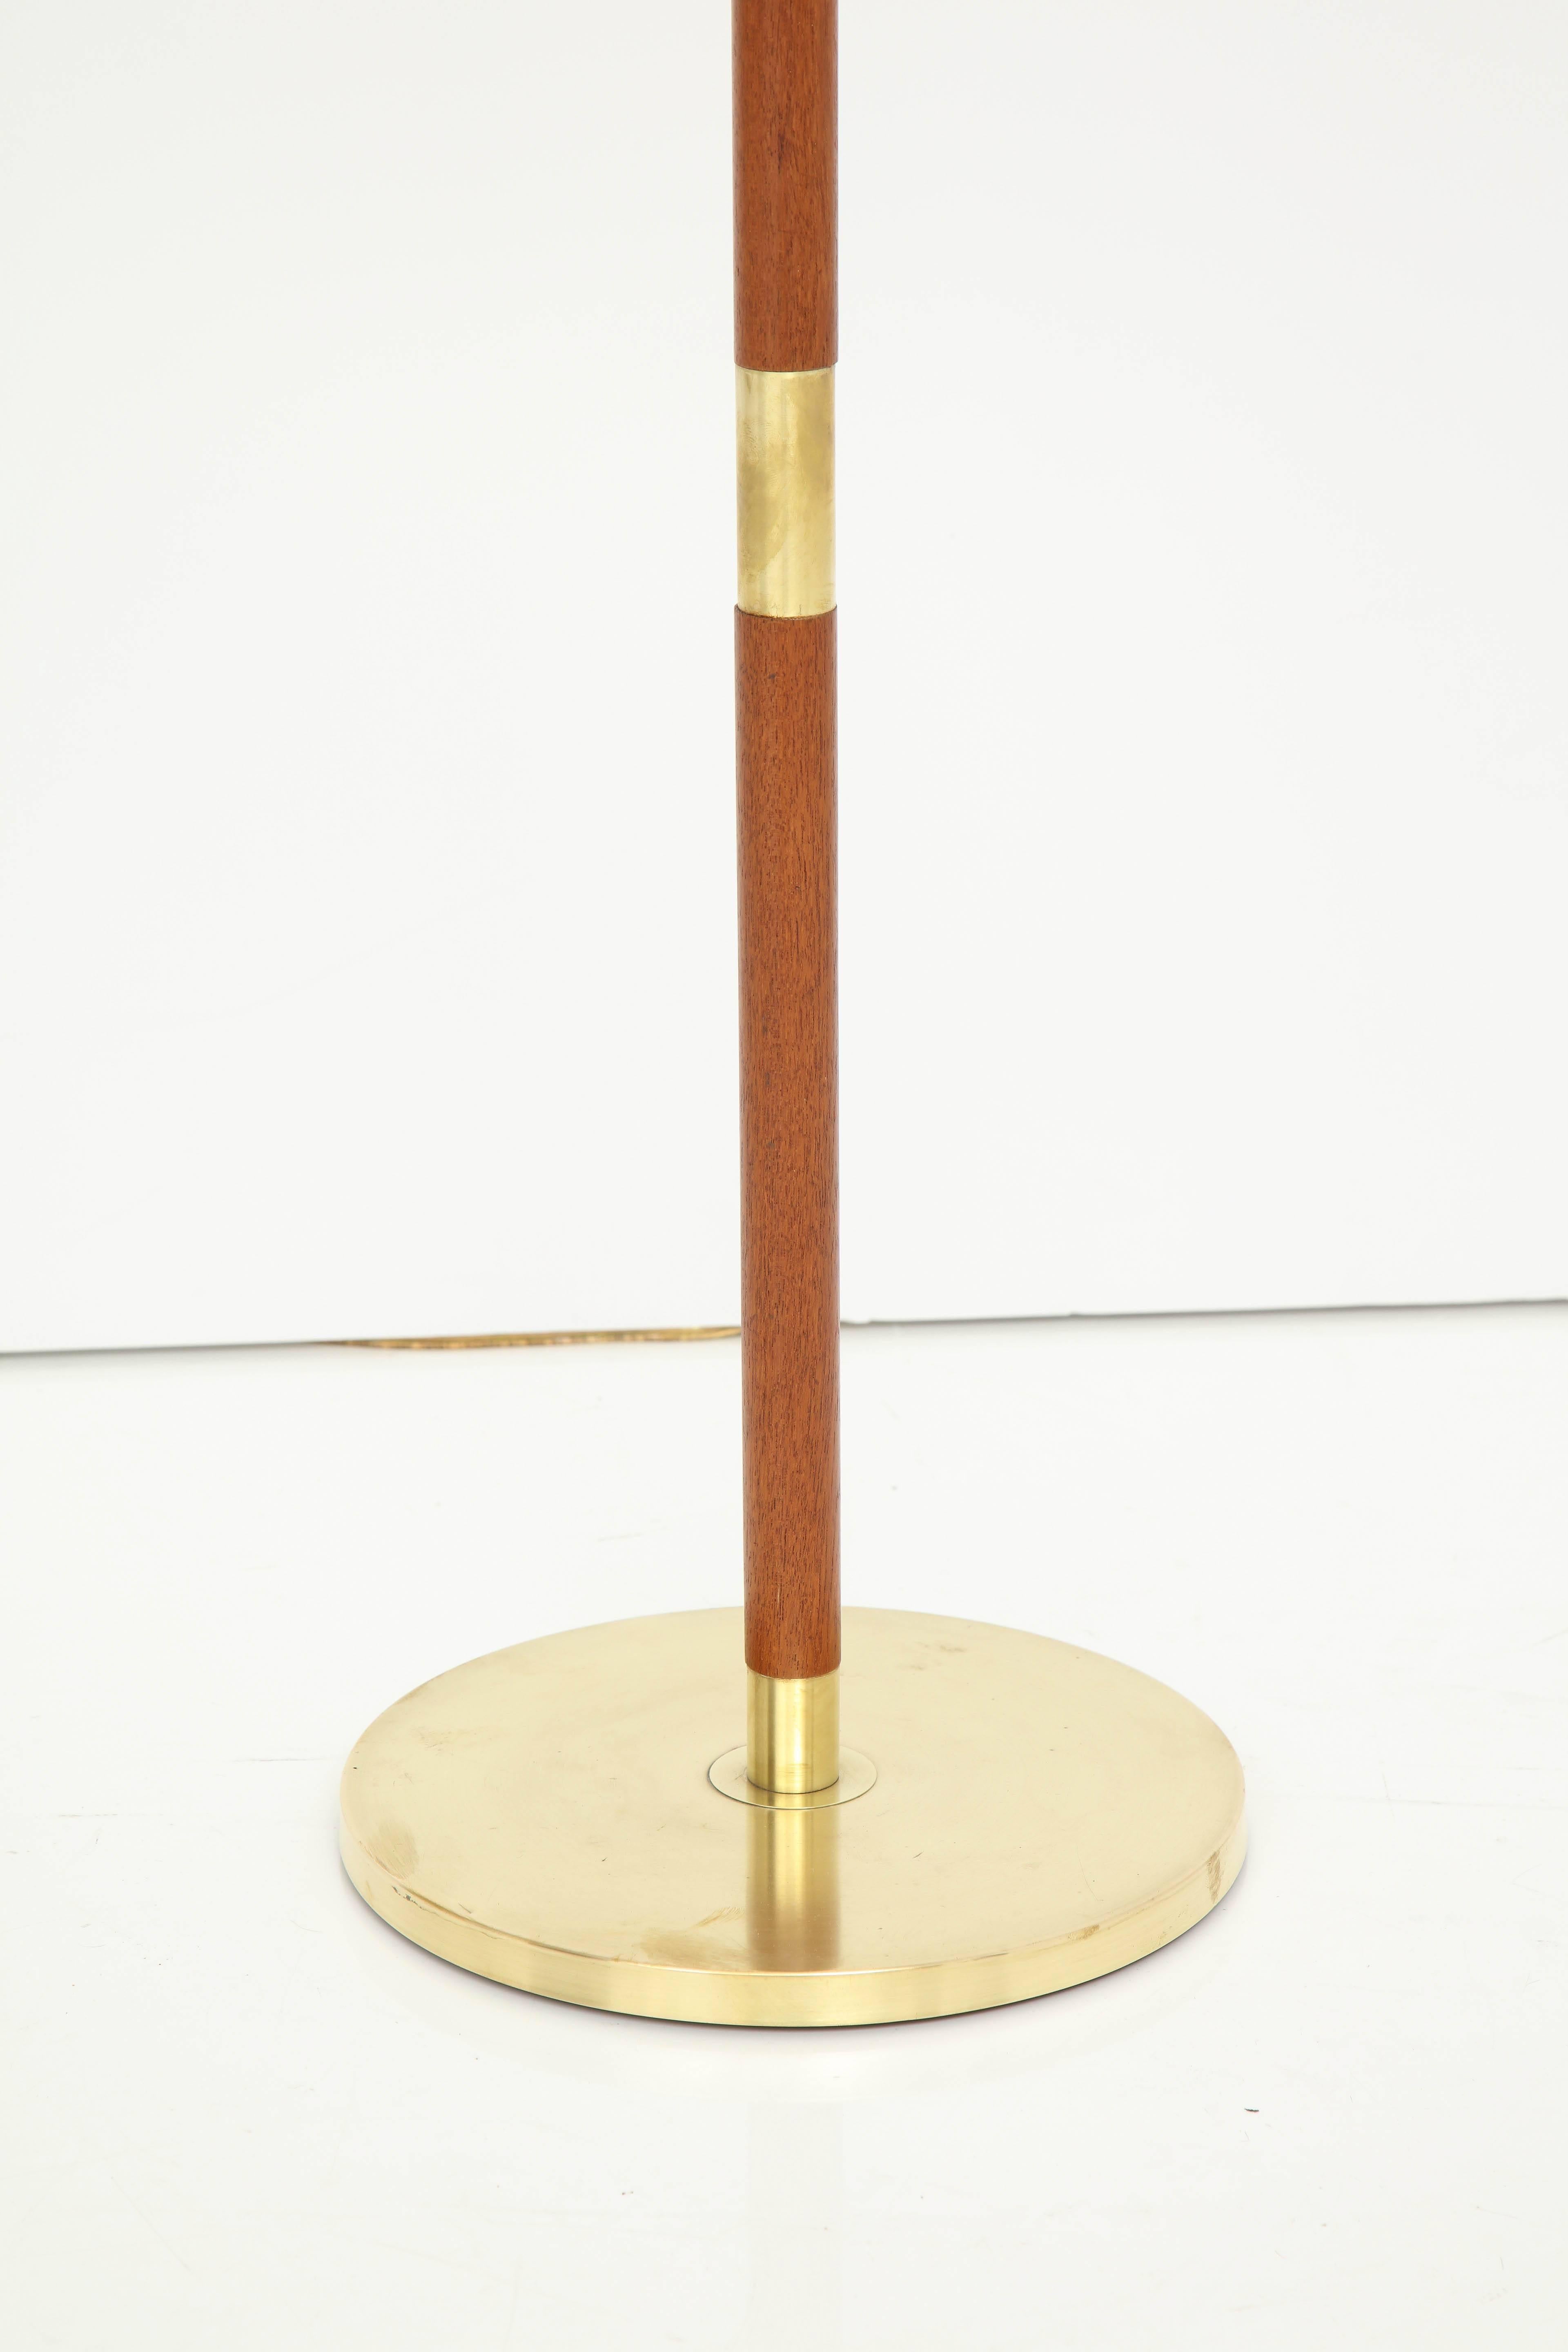 Scandinavian Modern Danish Brass and Teak Floor Lamp by Fog & Mørup, circa 1950s